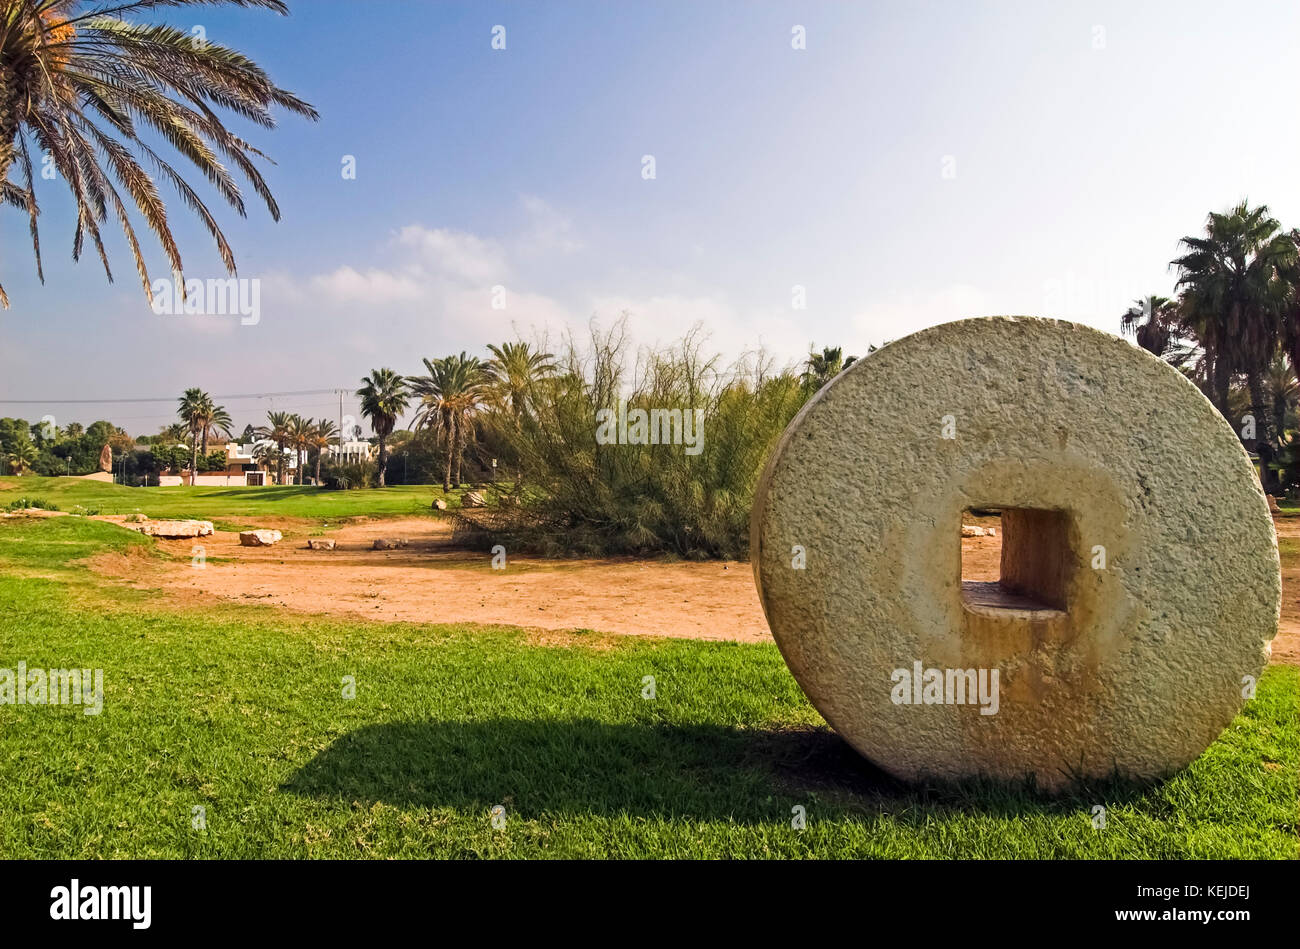 Israel, Herzliya city park, with ancient grindstones on display Stock Photo